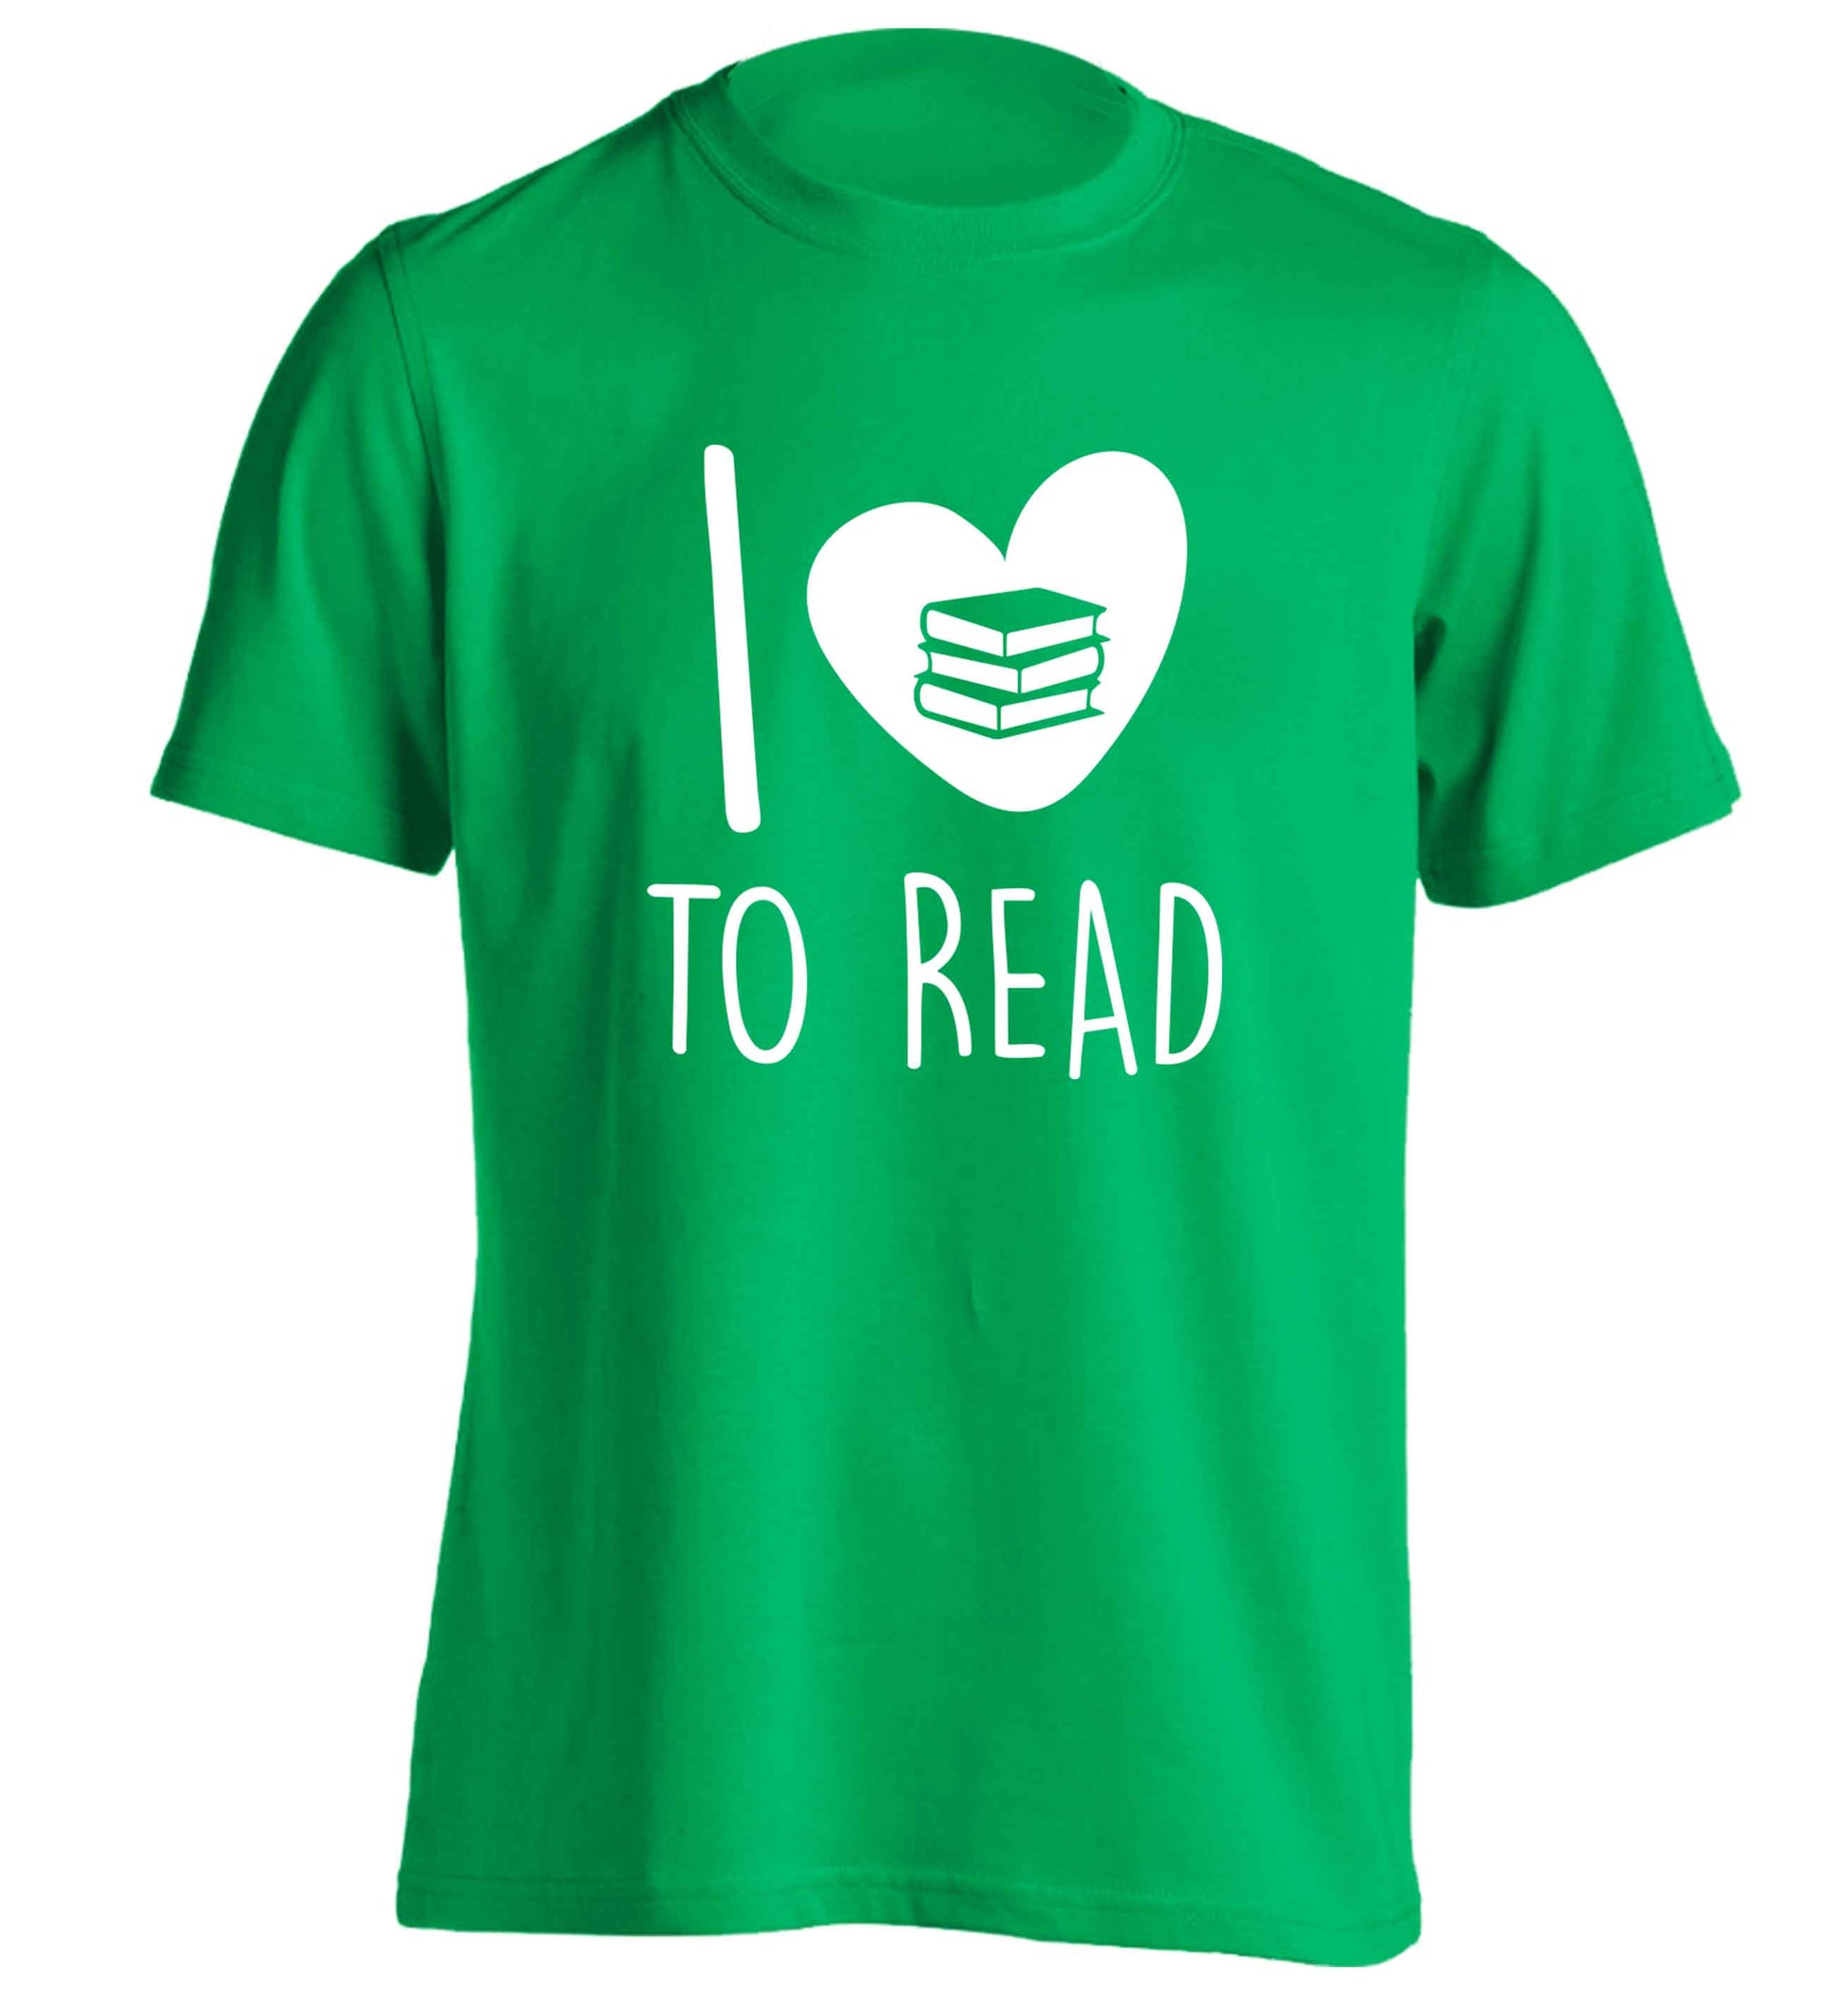 I love to read adults unisex green Tshirt 2XL